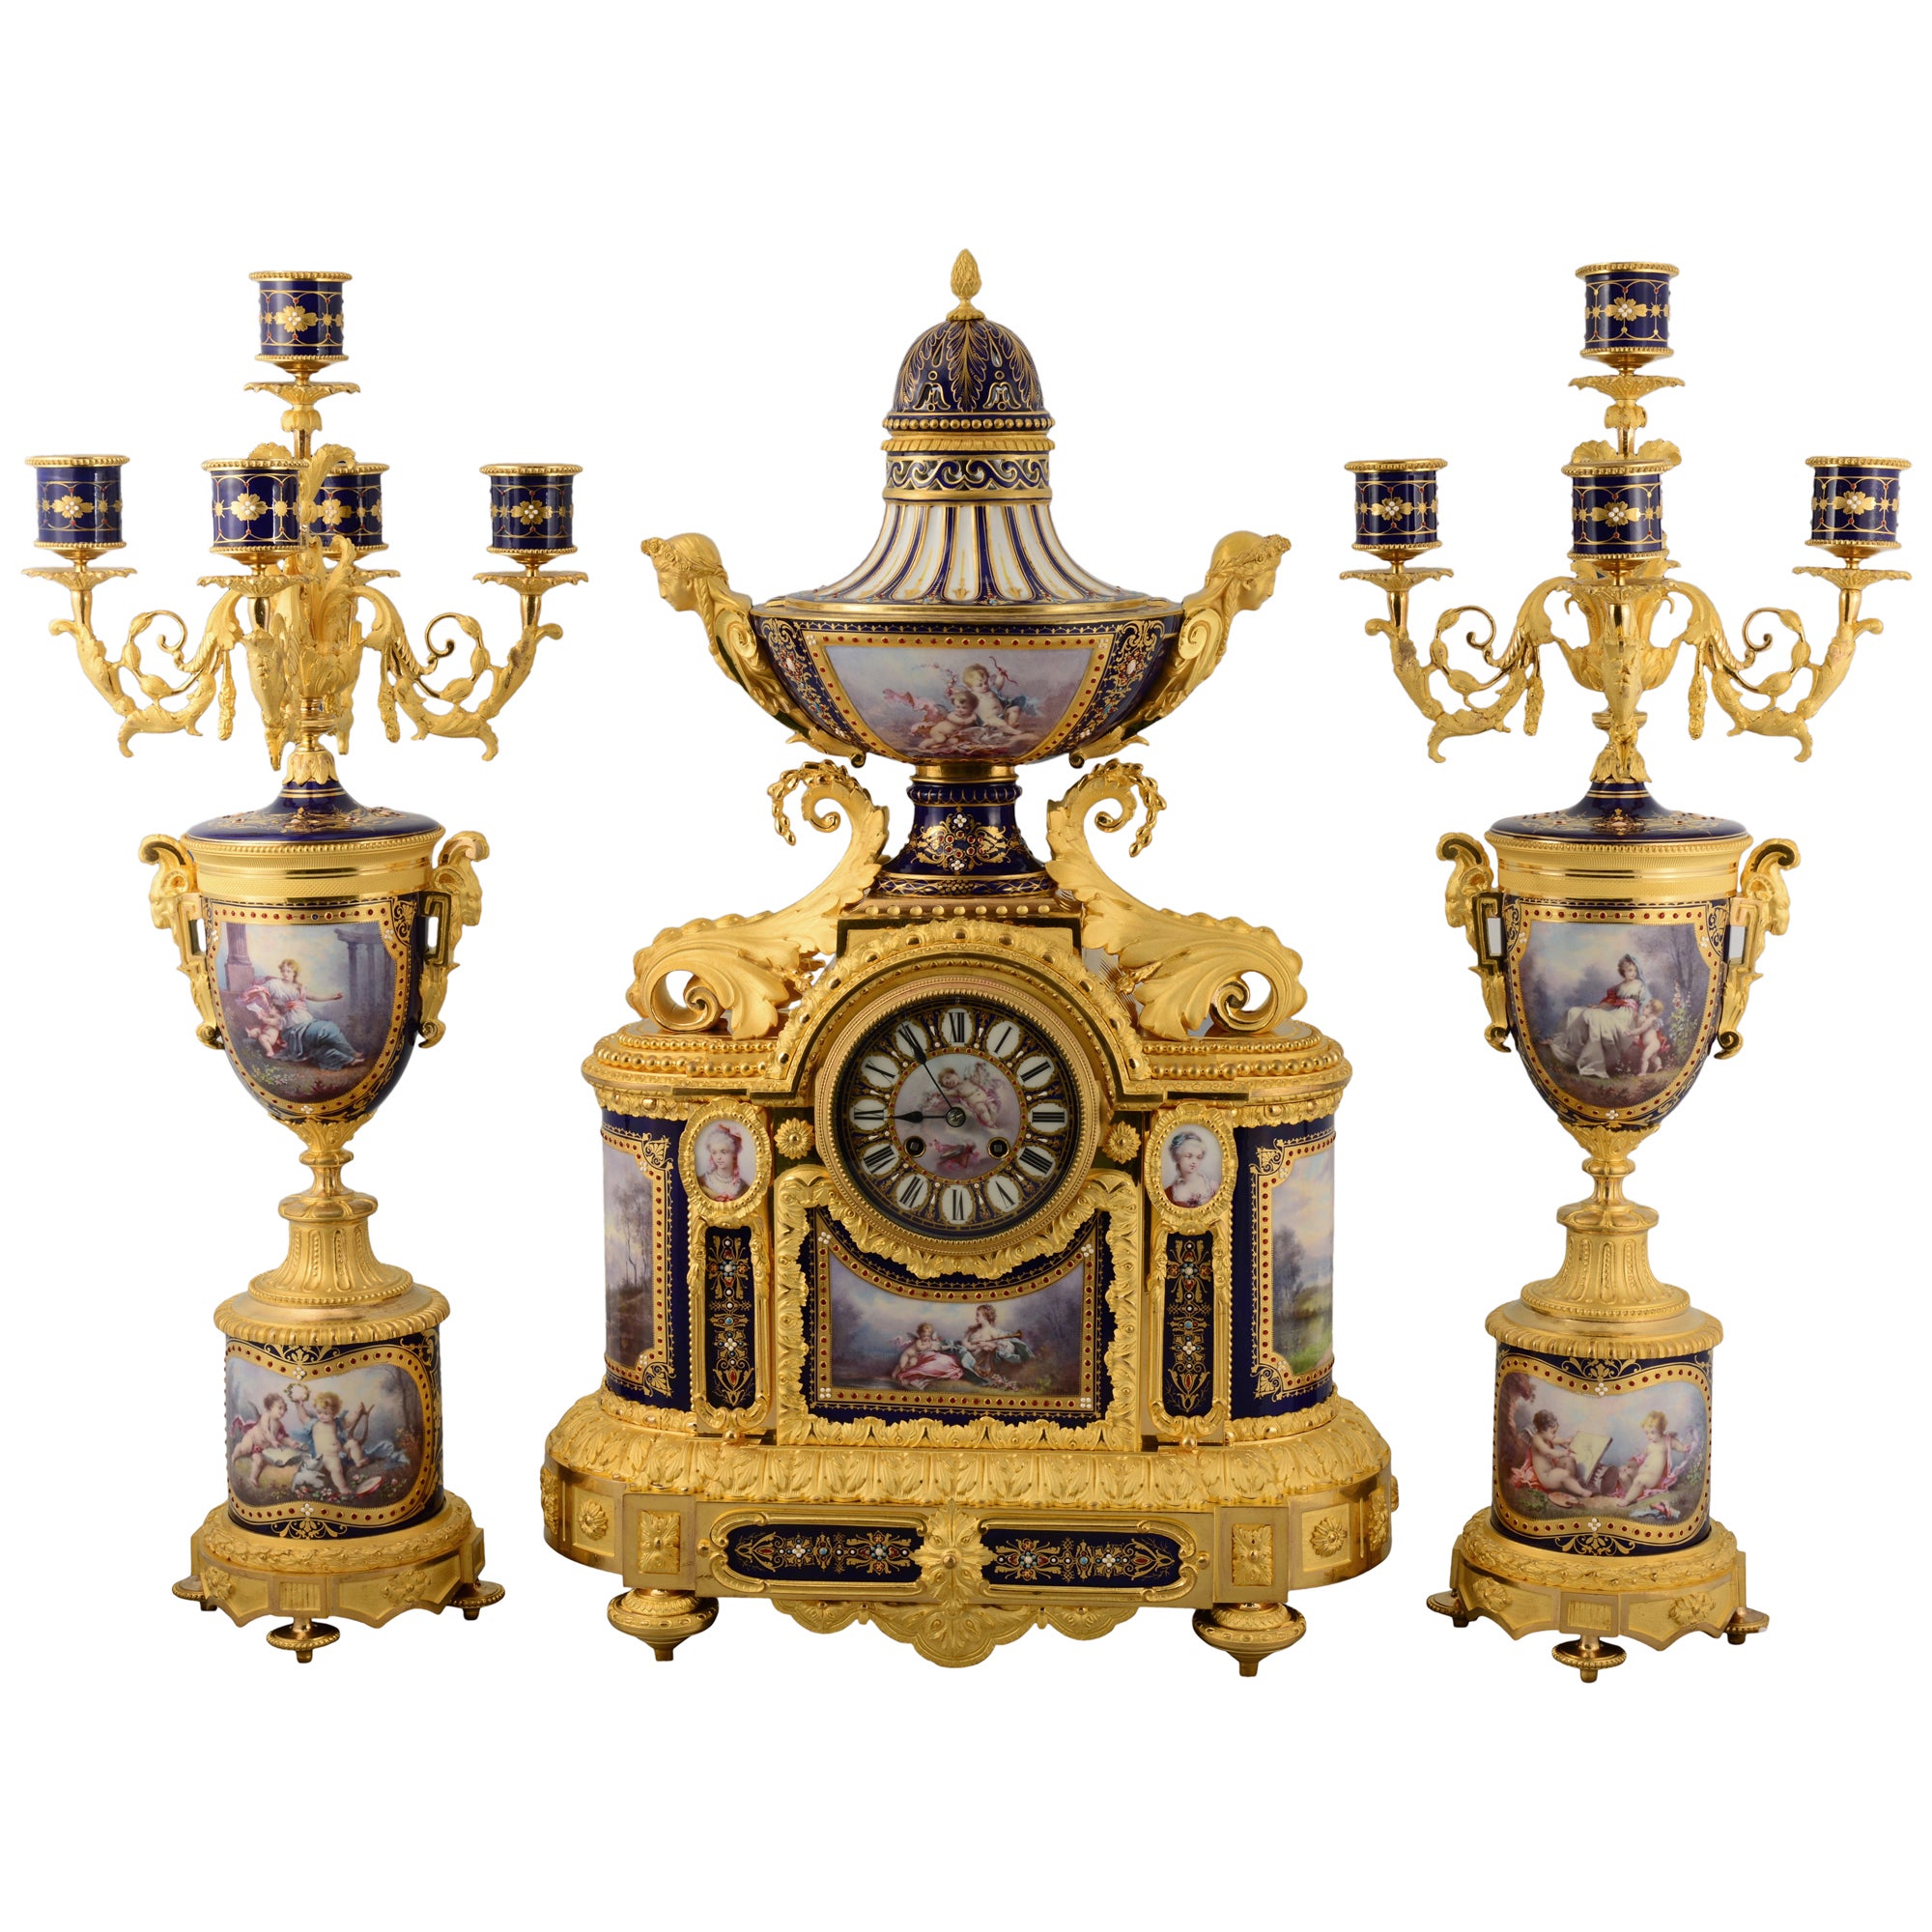 Garniture, clock and candelabra. Bronze, porcelain. France, 19th century.